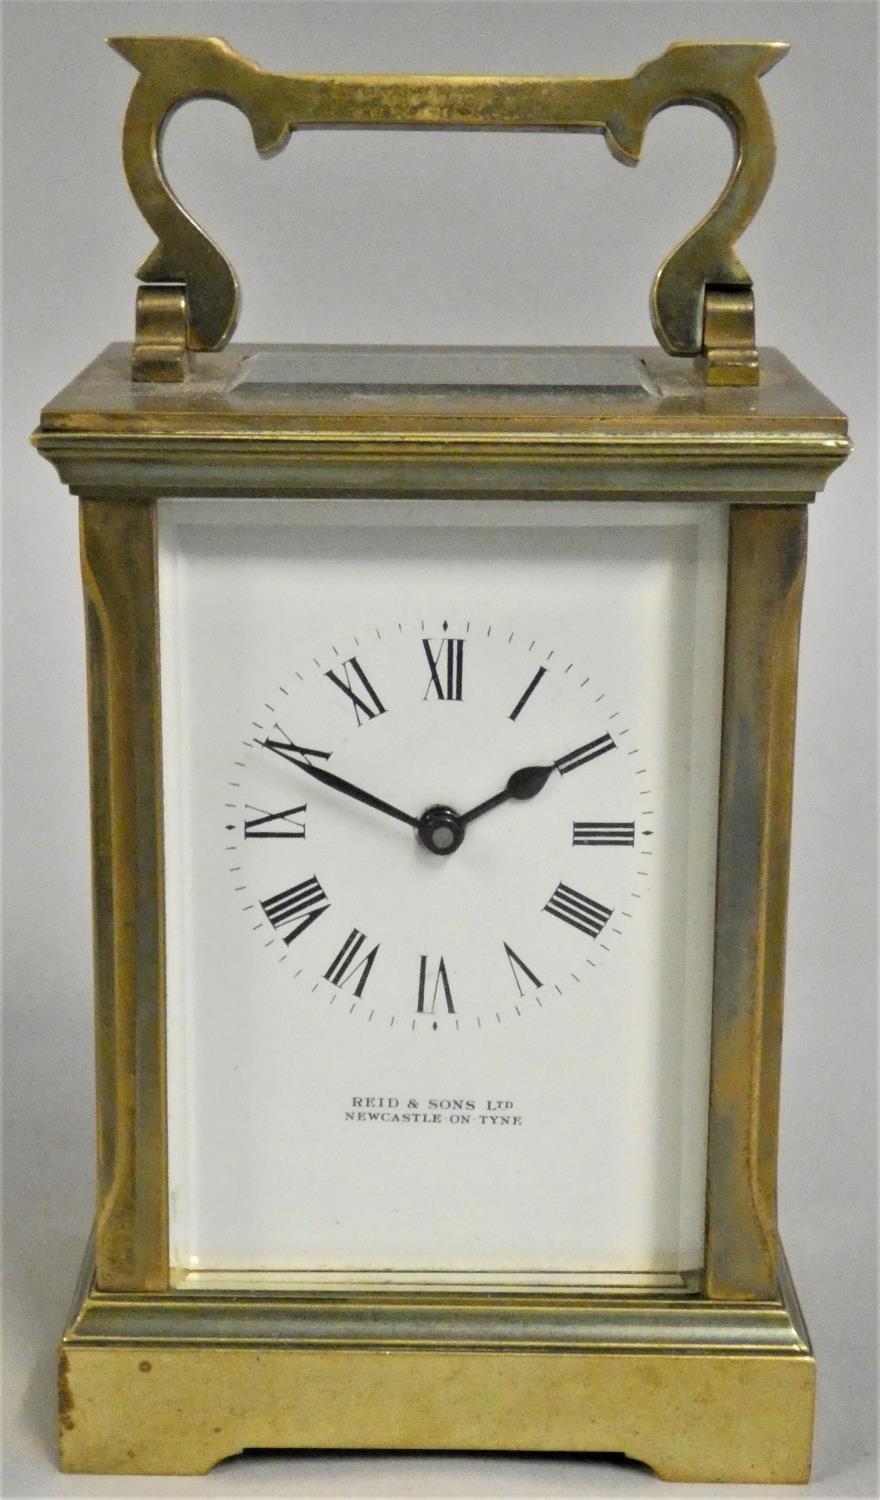 A brass carriage timepiece, retailed by Reid & Sons Ltd., Newcastle on Tyne, white enamel dial